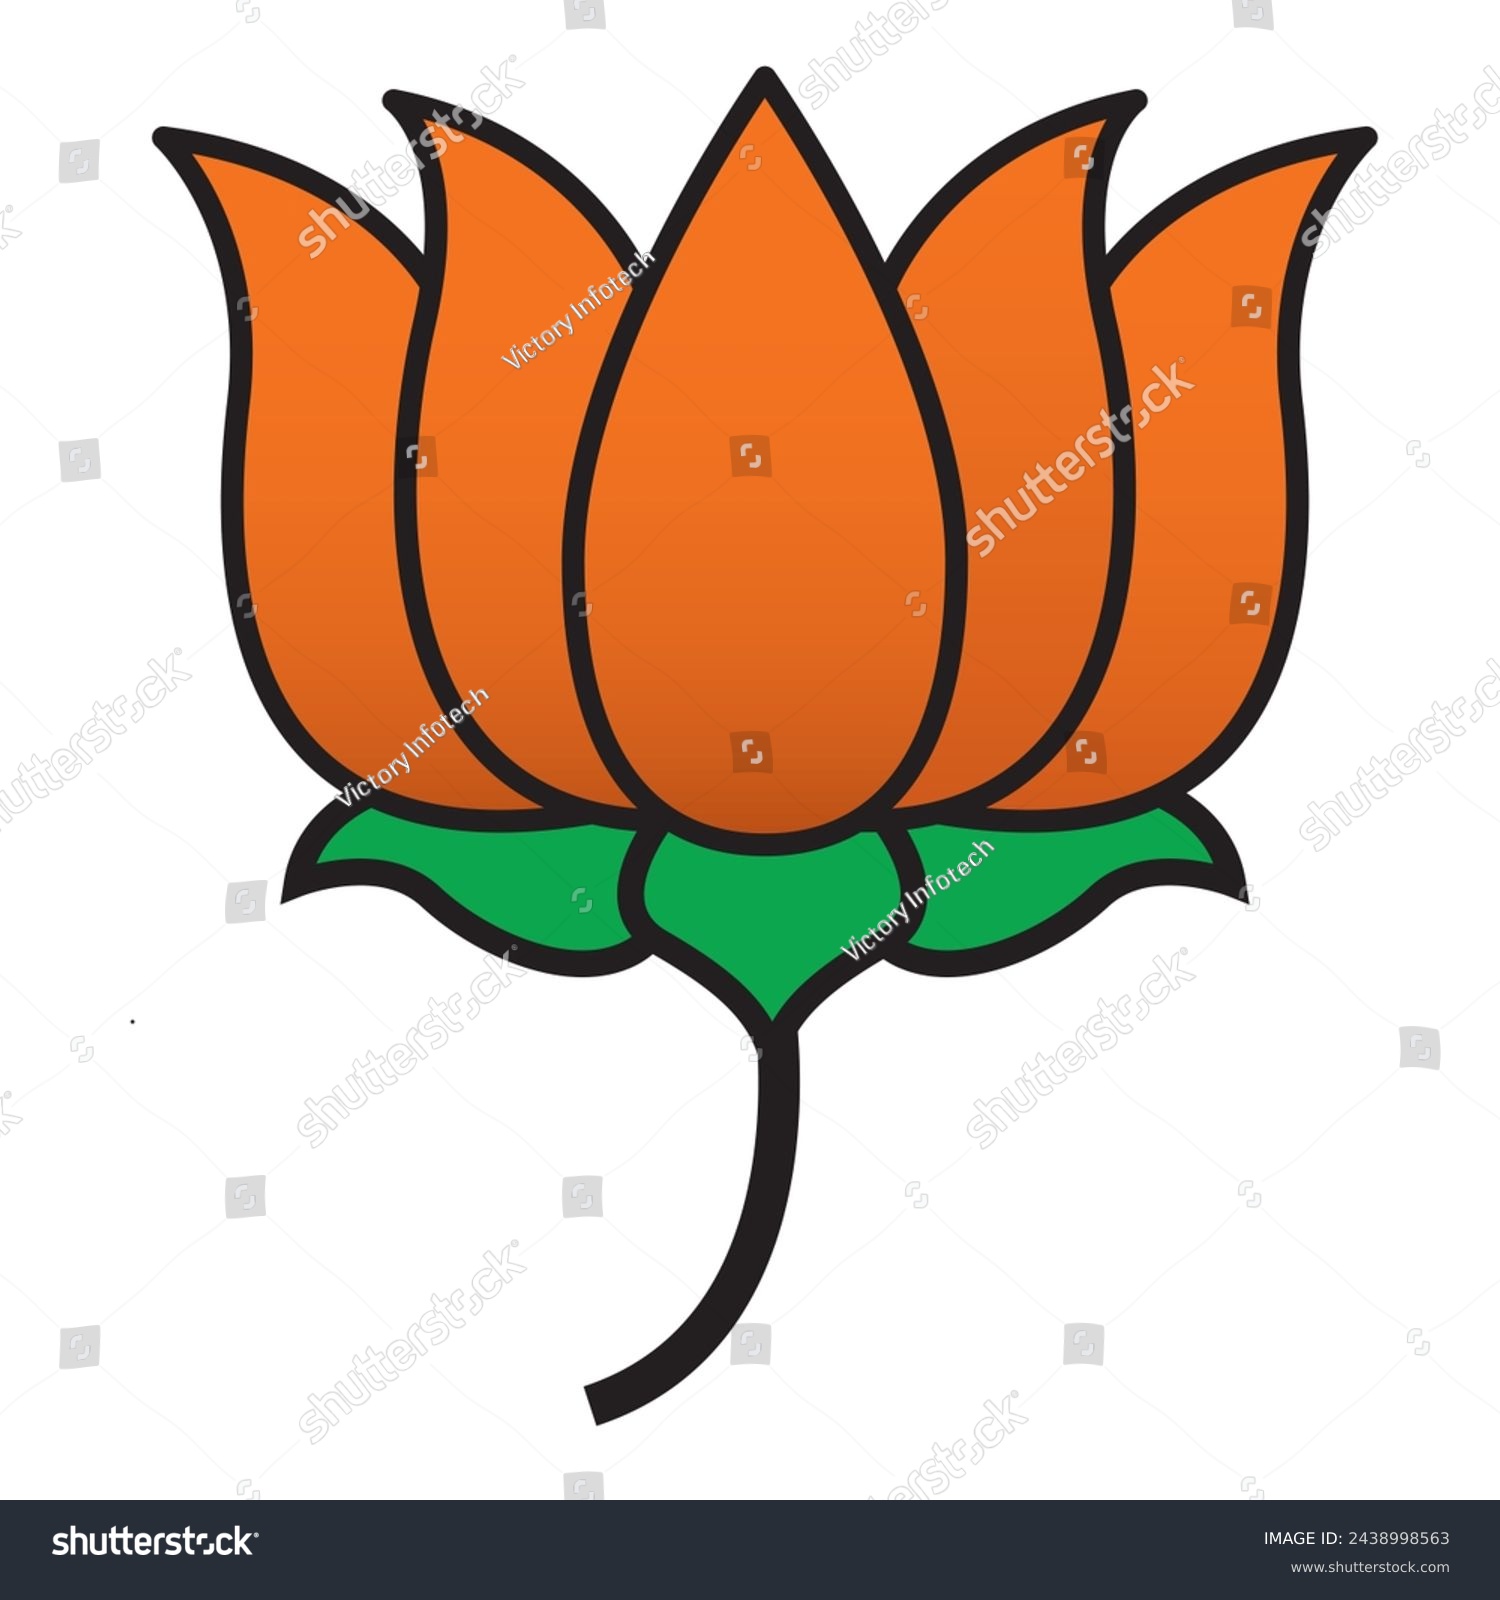 SVG of Bharatiya Janata Party  political BJP party logo svg